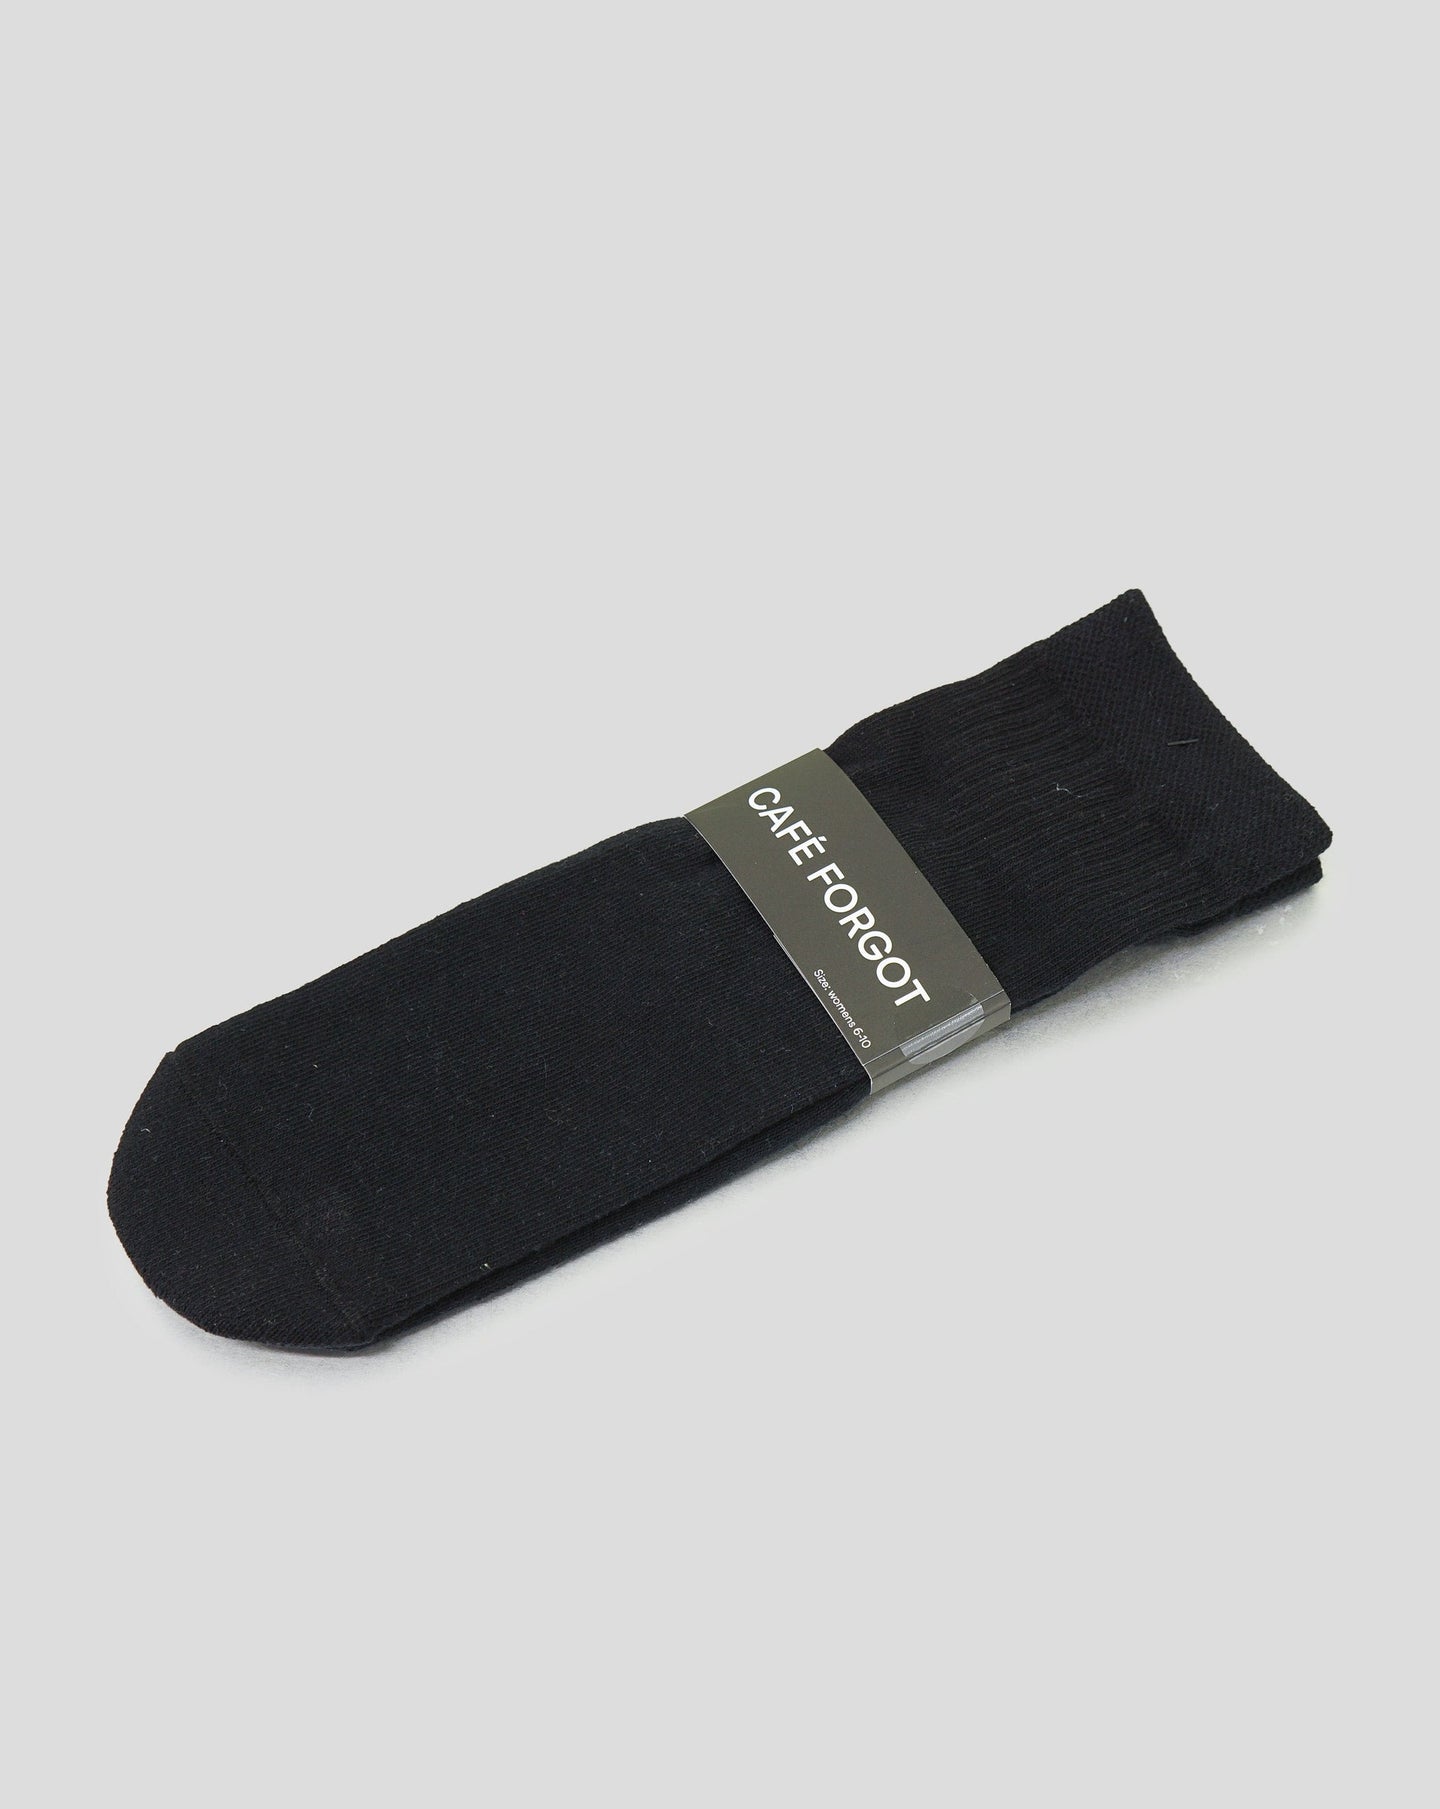 Café Forgot - black socks (1 pair)